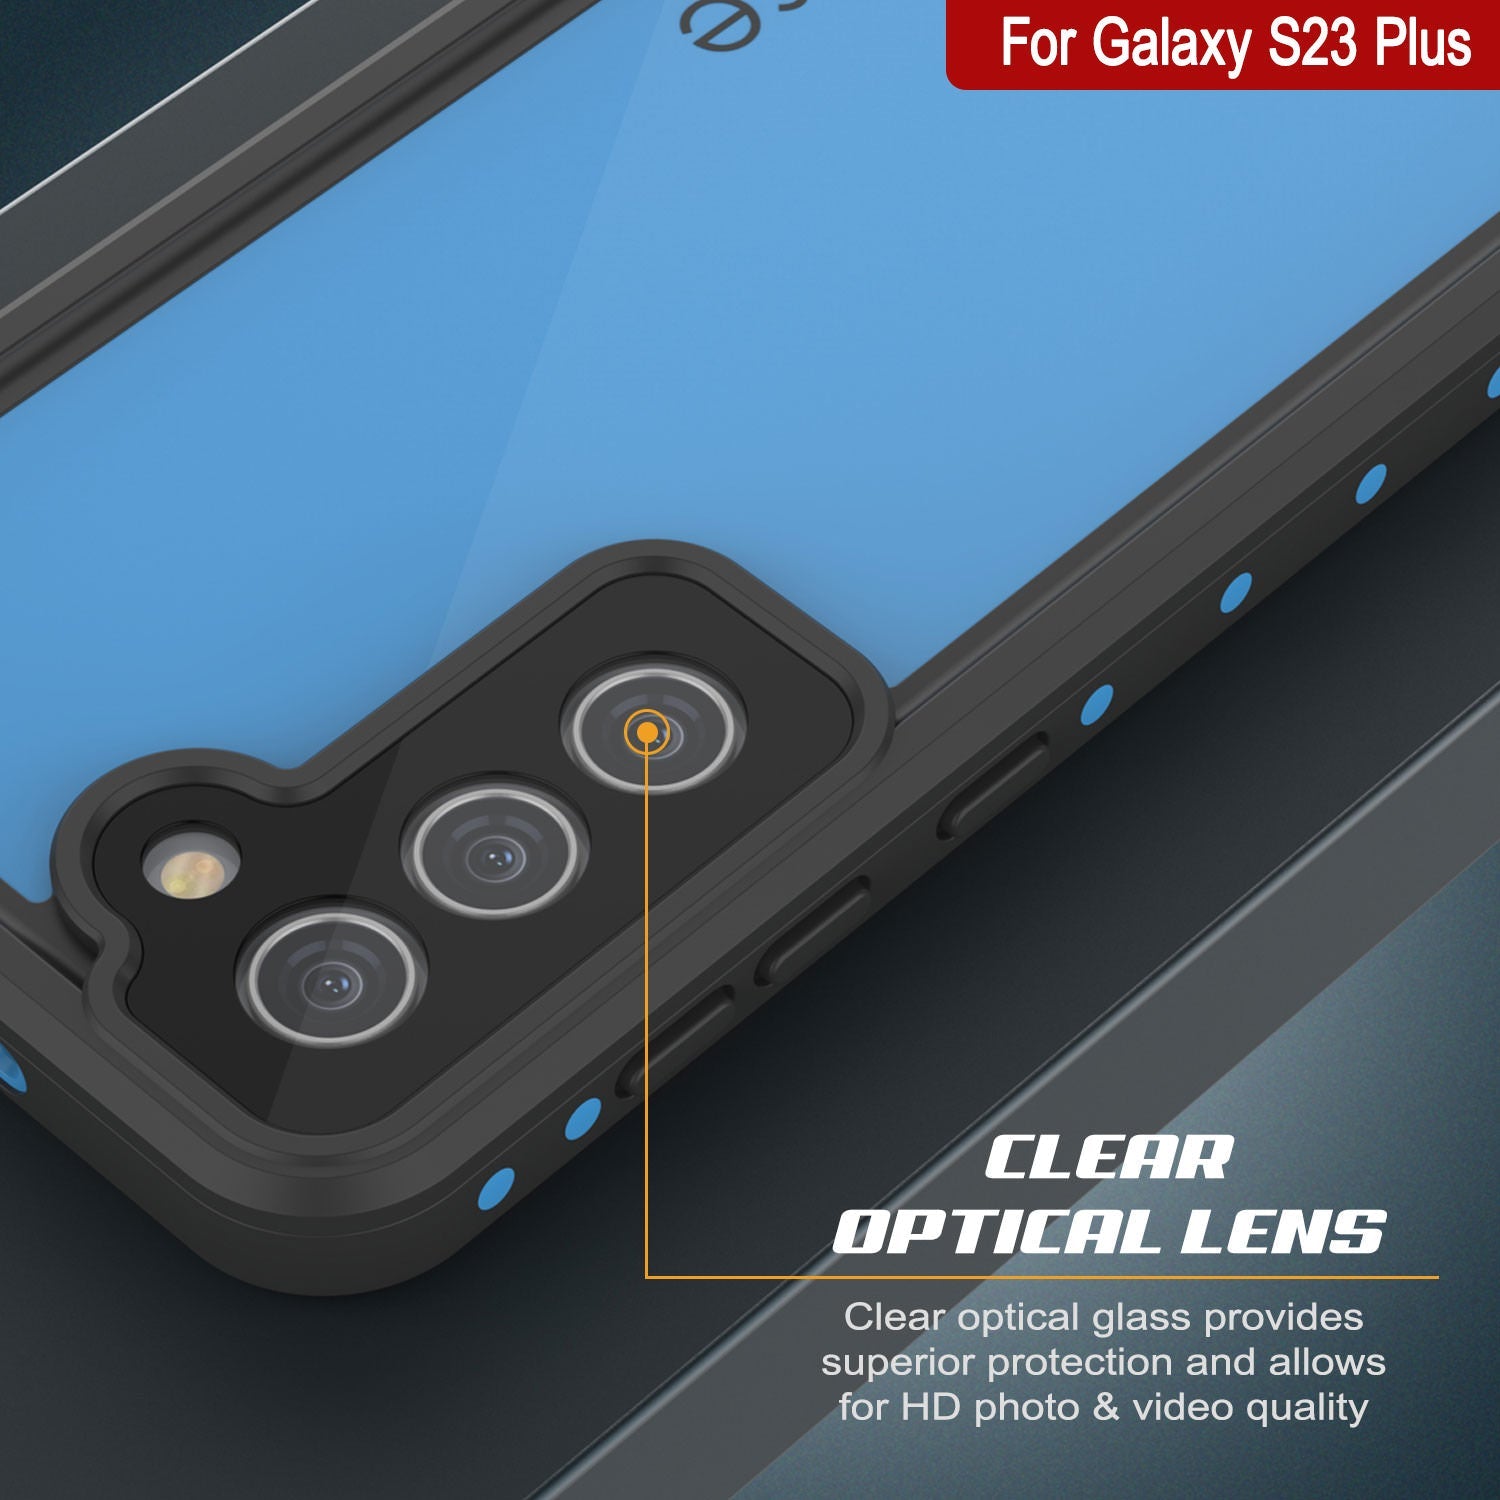 Galaxy S24+ Plus Waterproof Case PunkCase StudStar Light Blue Thin 6.7ft Underwater IP68 ShockProof